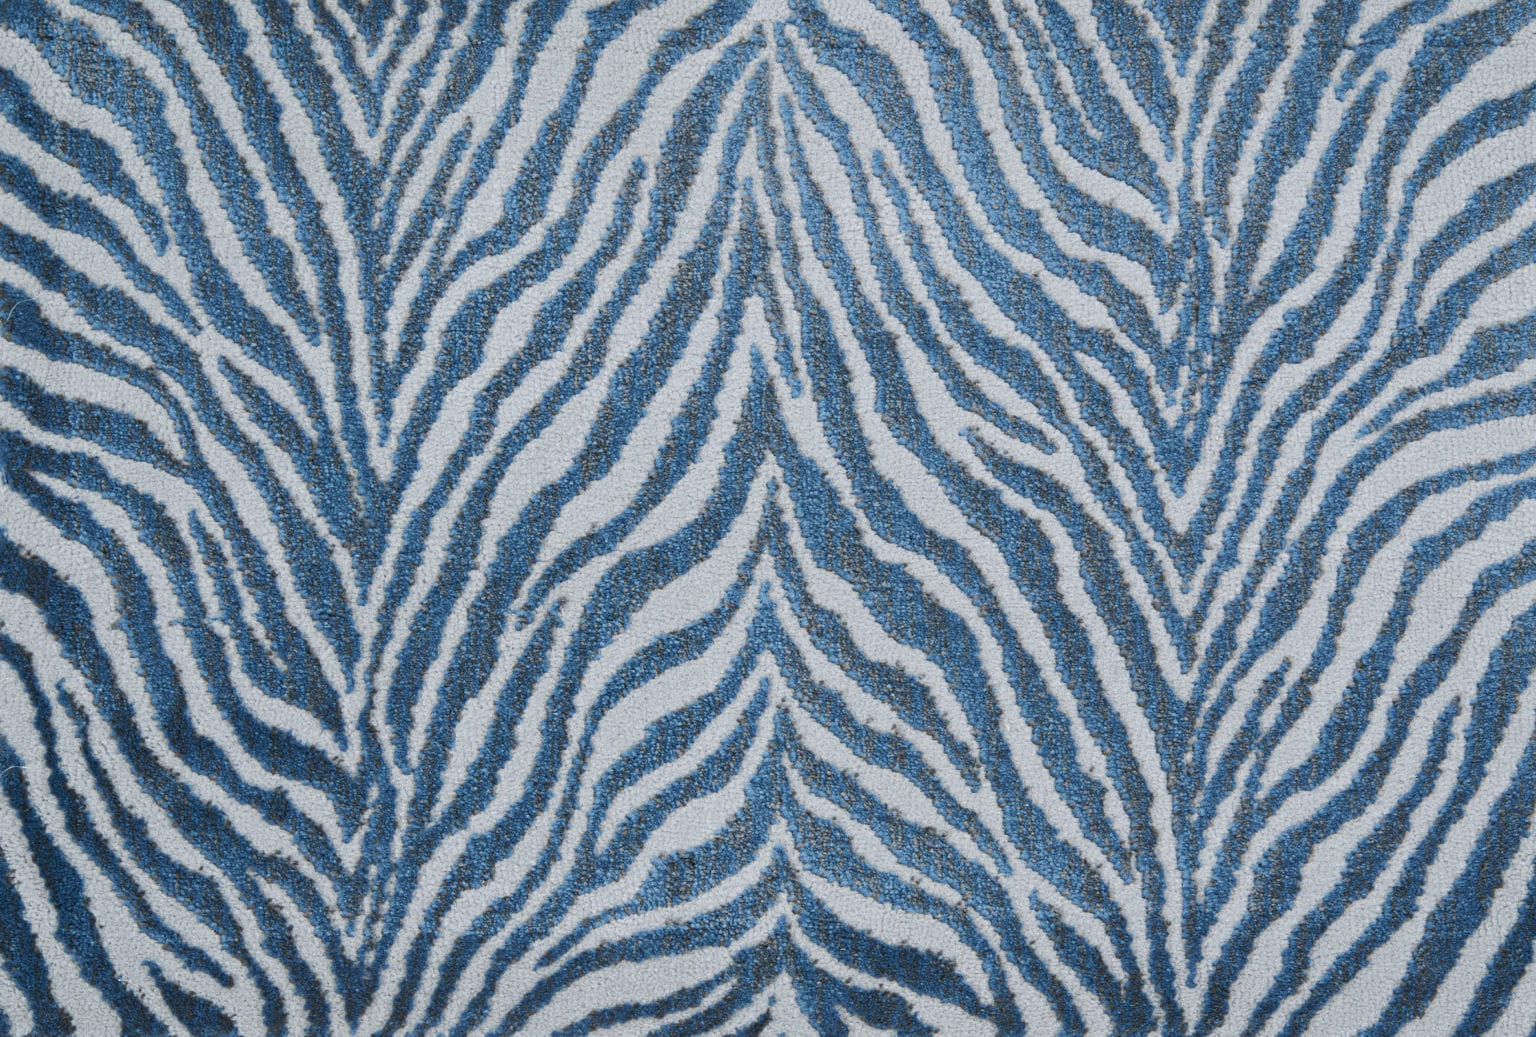 Blue animal print carpet 